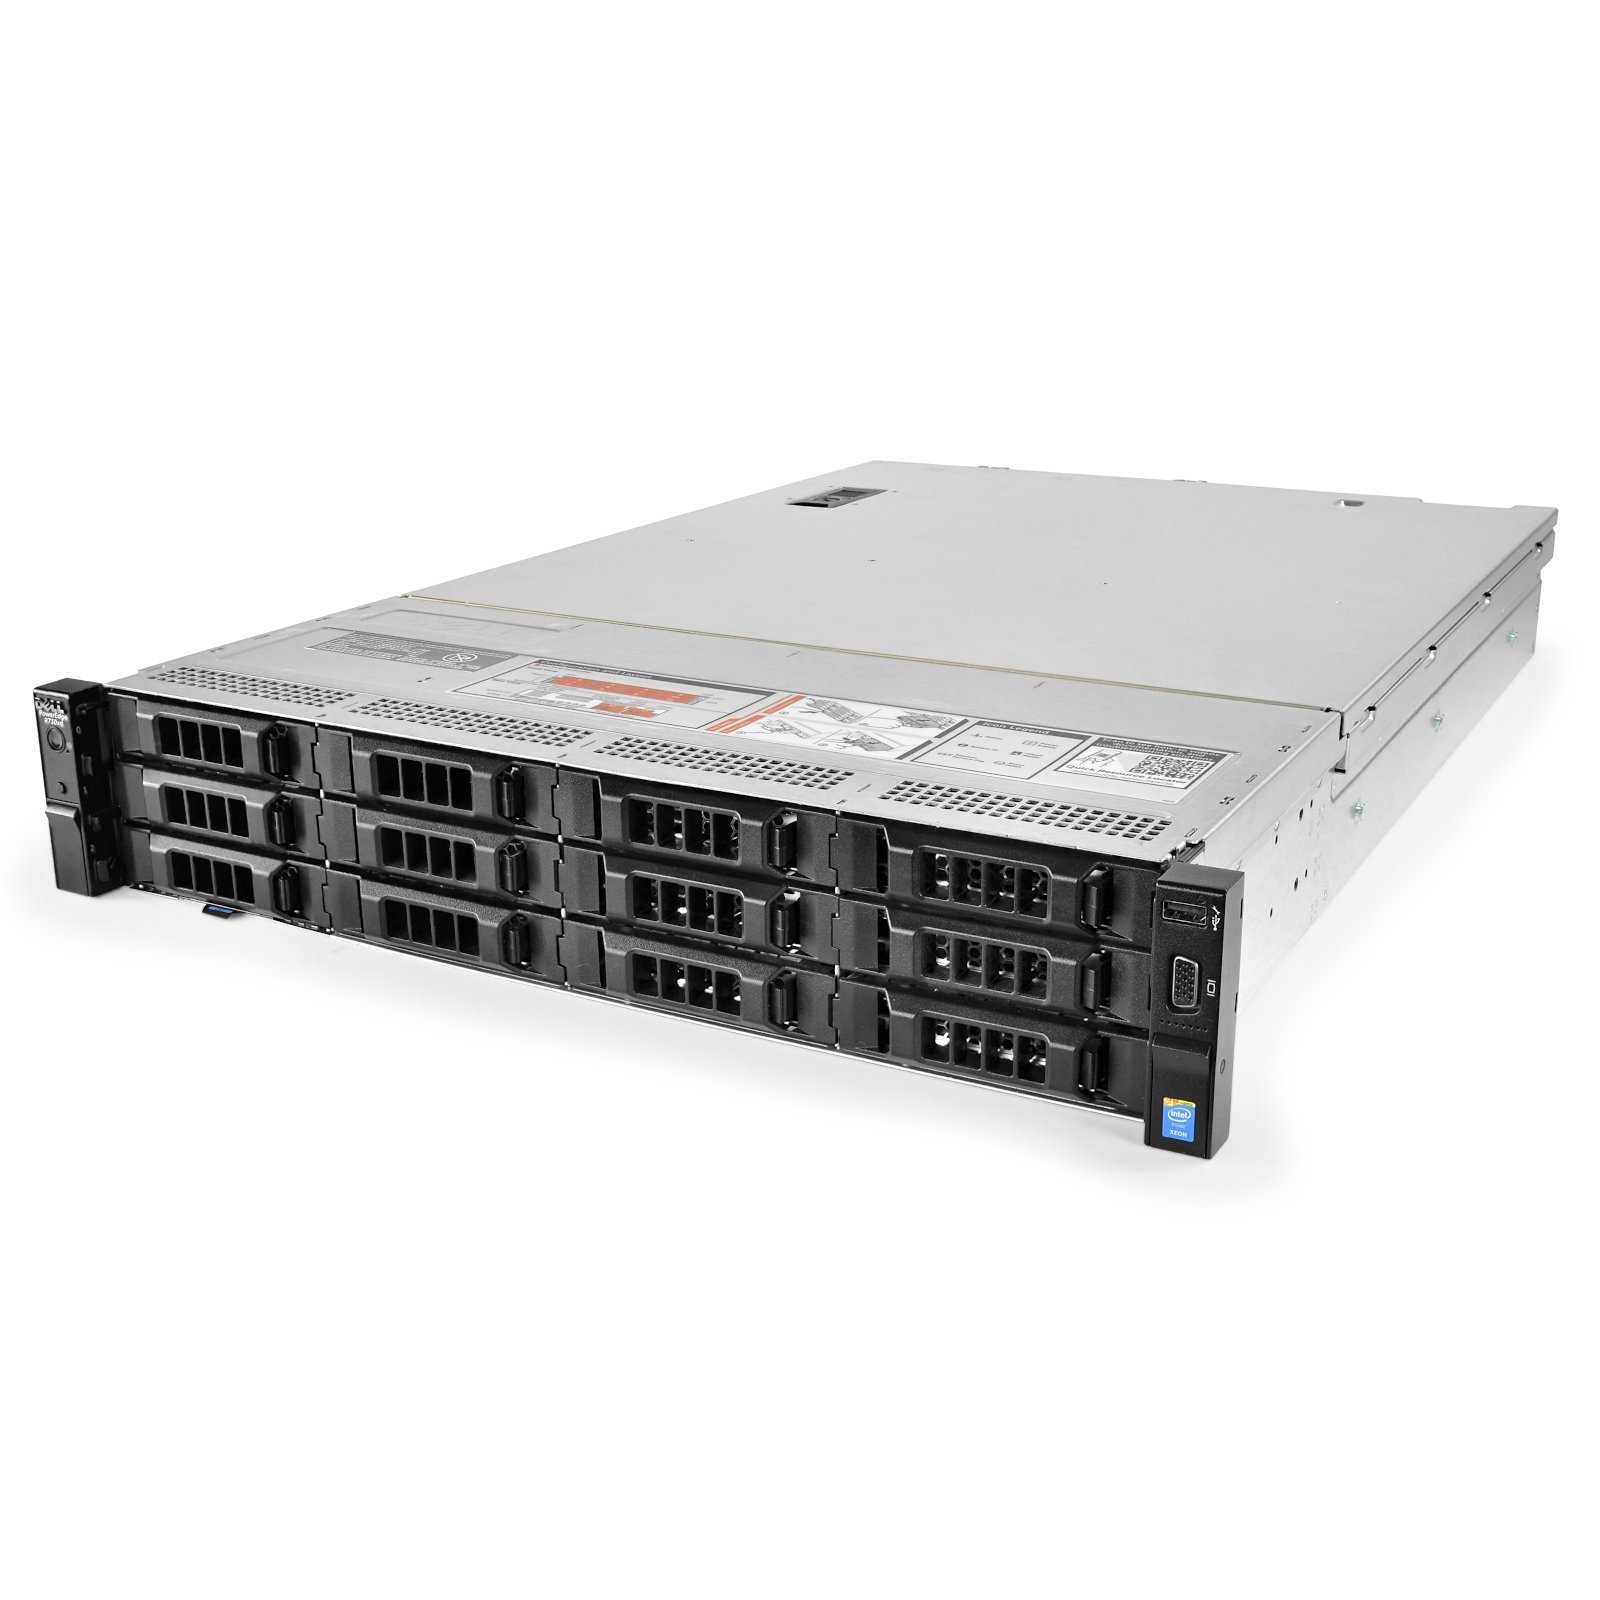 Подробное фото Сервер DELL PowerEdge R730XD Xeon 2x E5-2650v4 128Gb 2133P DDR4 12x noHDD 3.5", SAS RAID Perc H730 mini, 1024Mb, 2*PSU 750W